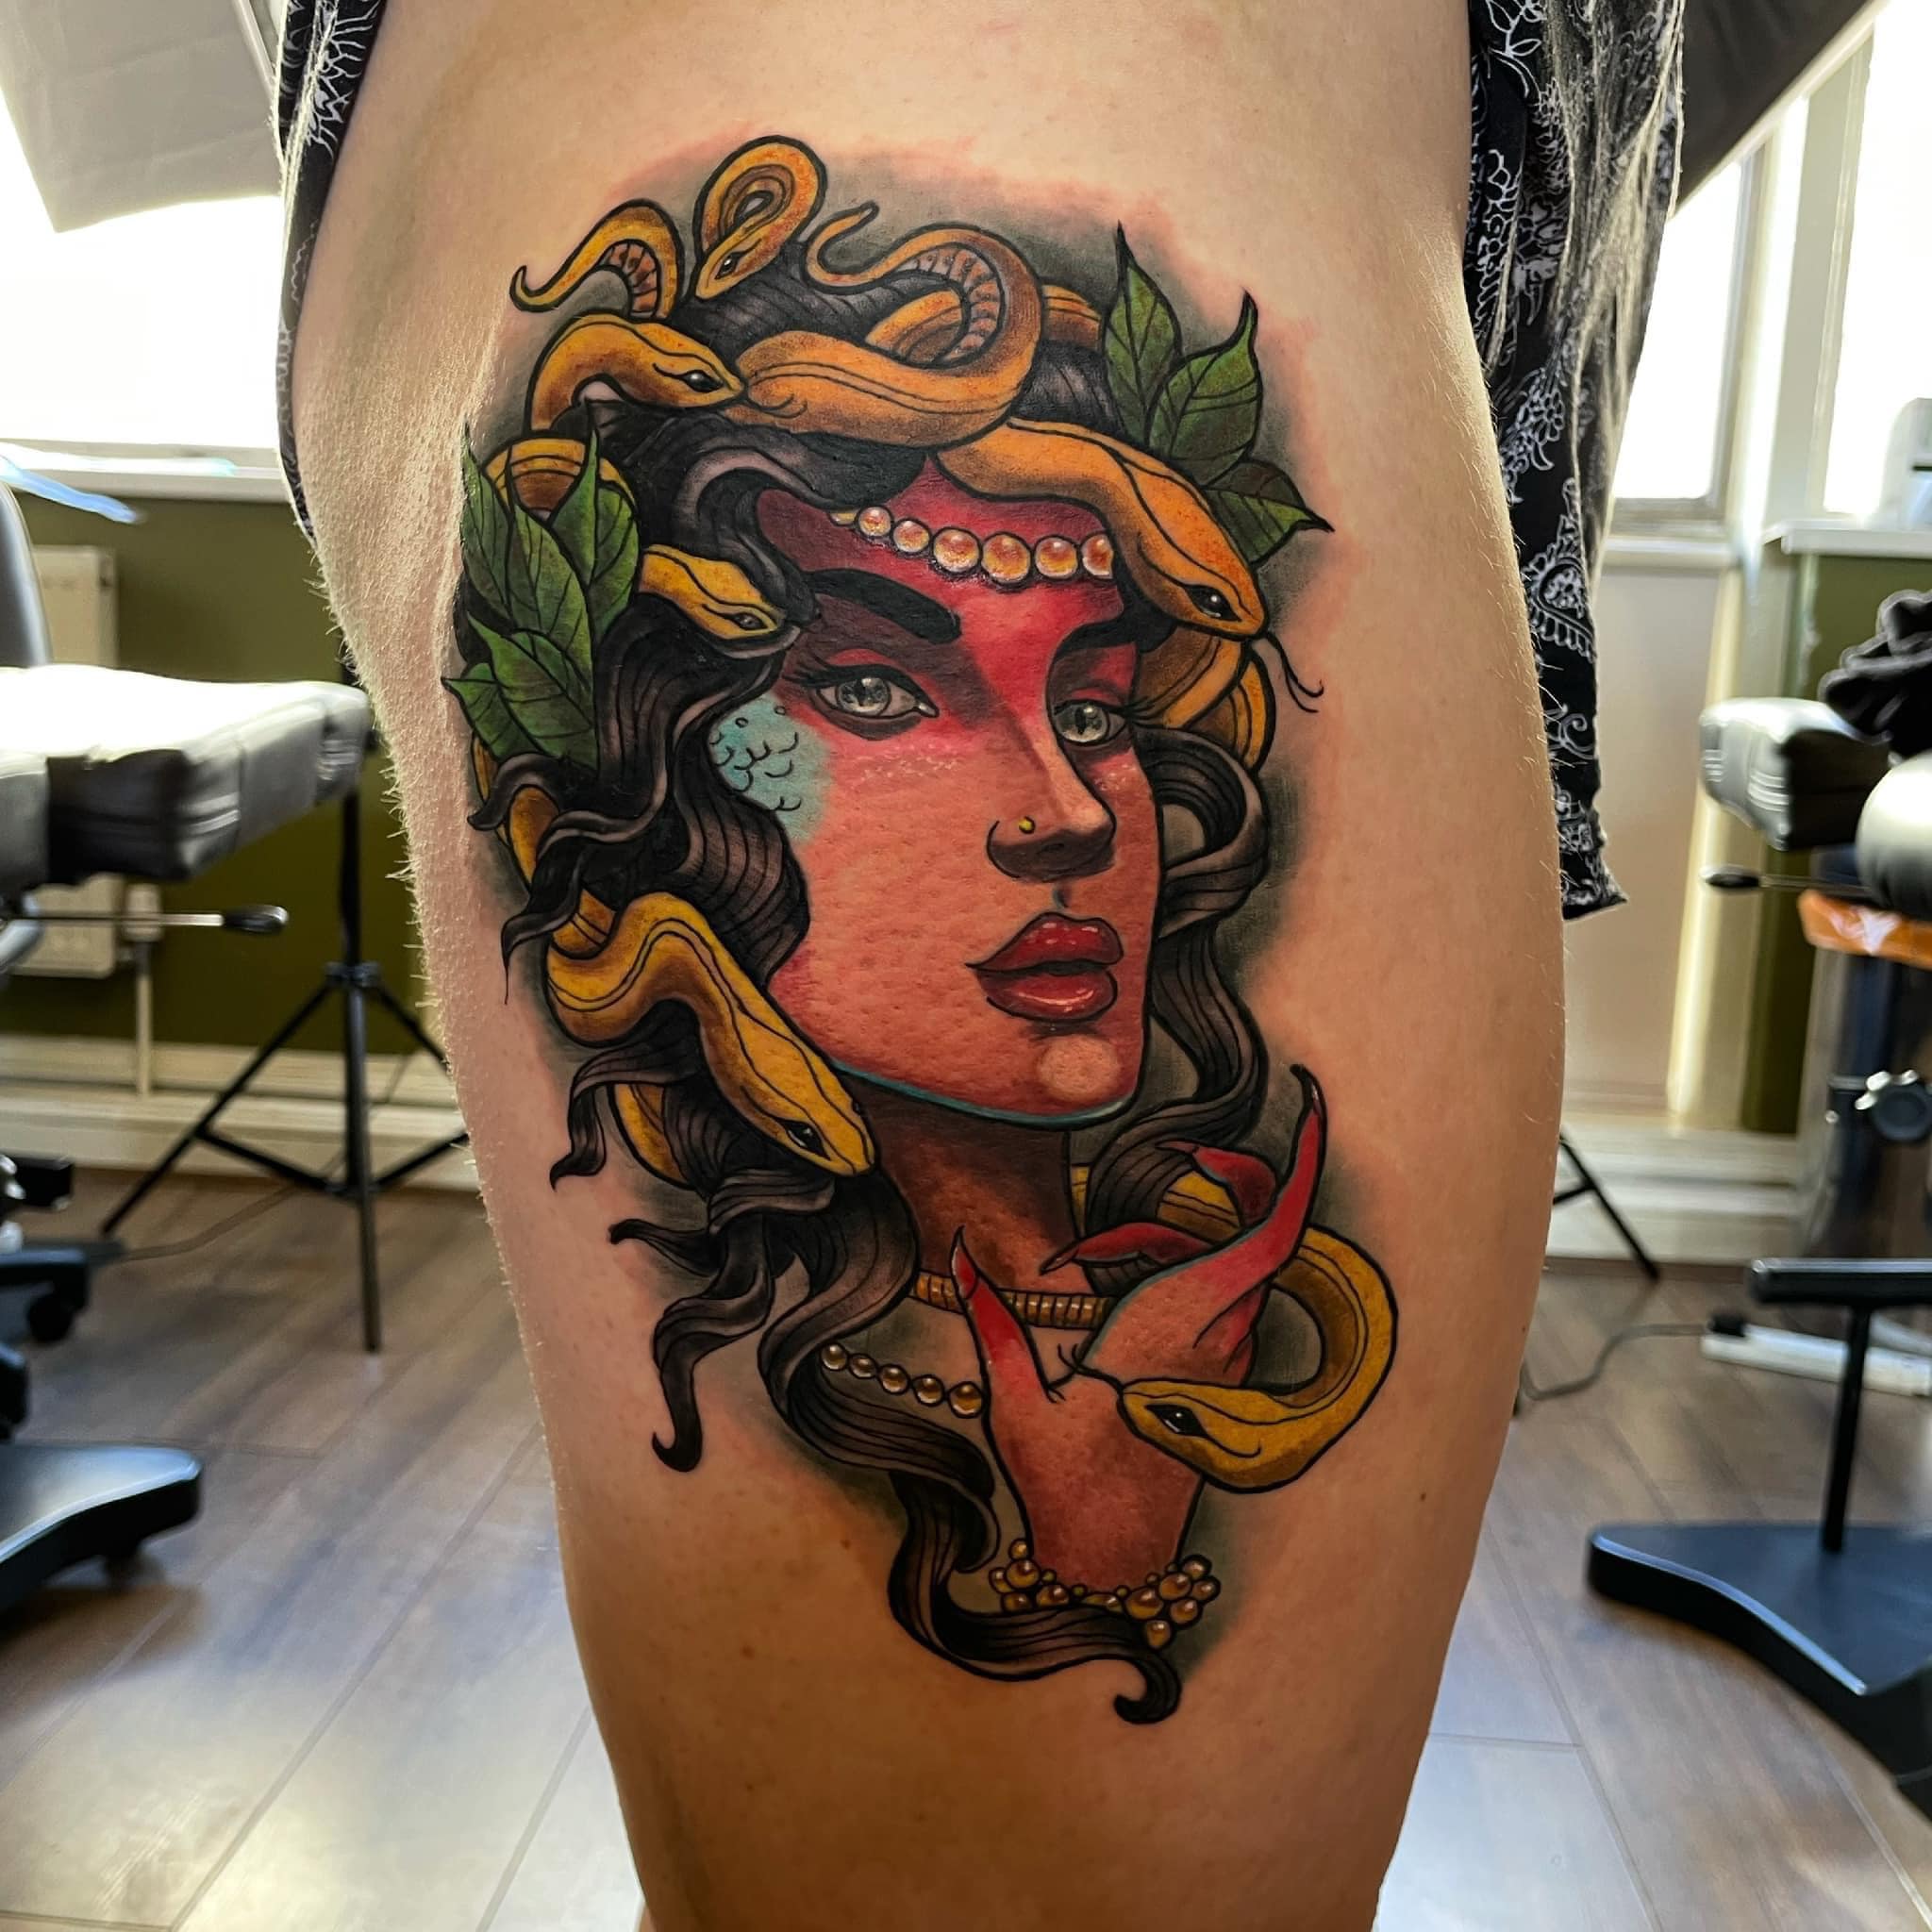 Medusa Tattoos: Symbolism and Meaning | POPSUGAR Beauty UK